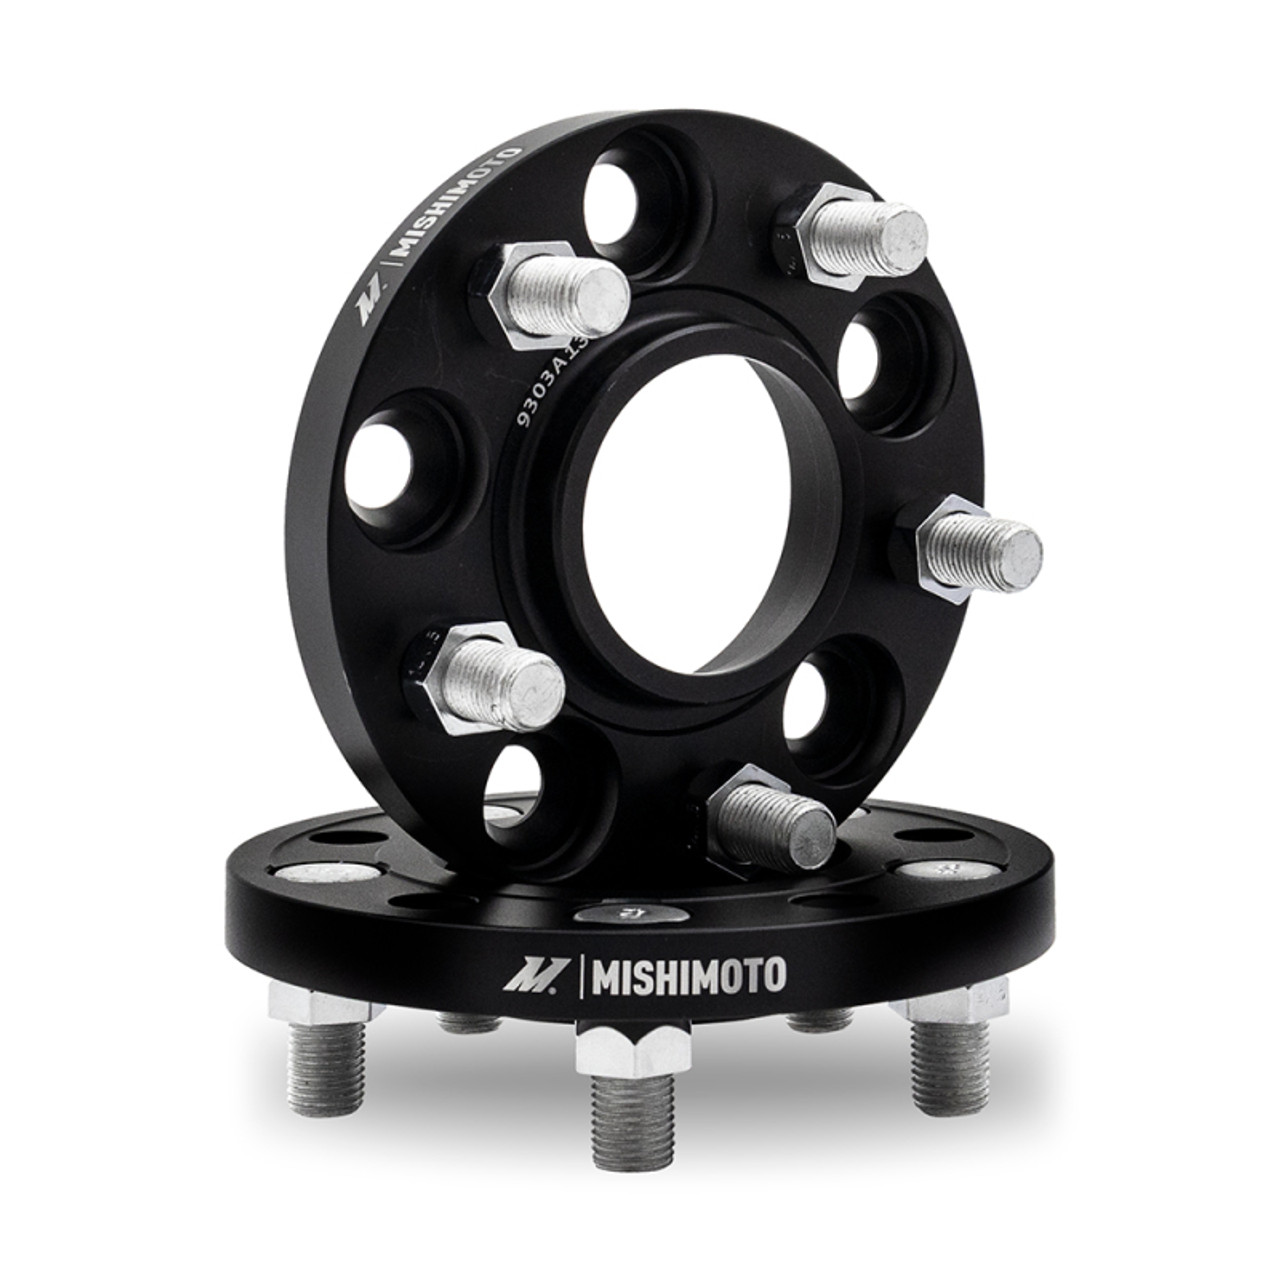 Mishimoto Mishimoto Wheel Spacers 5x114.3 64.1 CB M14x1.5 20mm BK - MMWS-012-200BK Photo - Primary